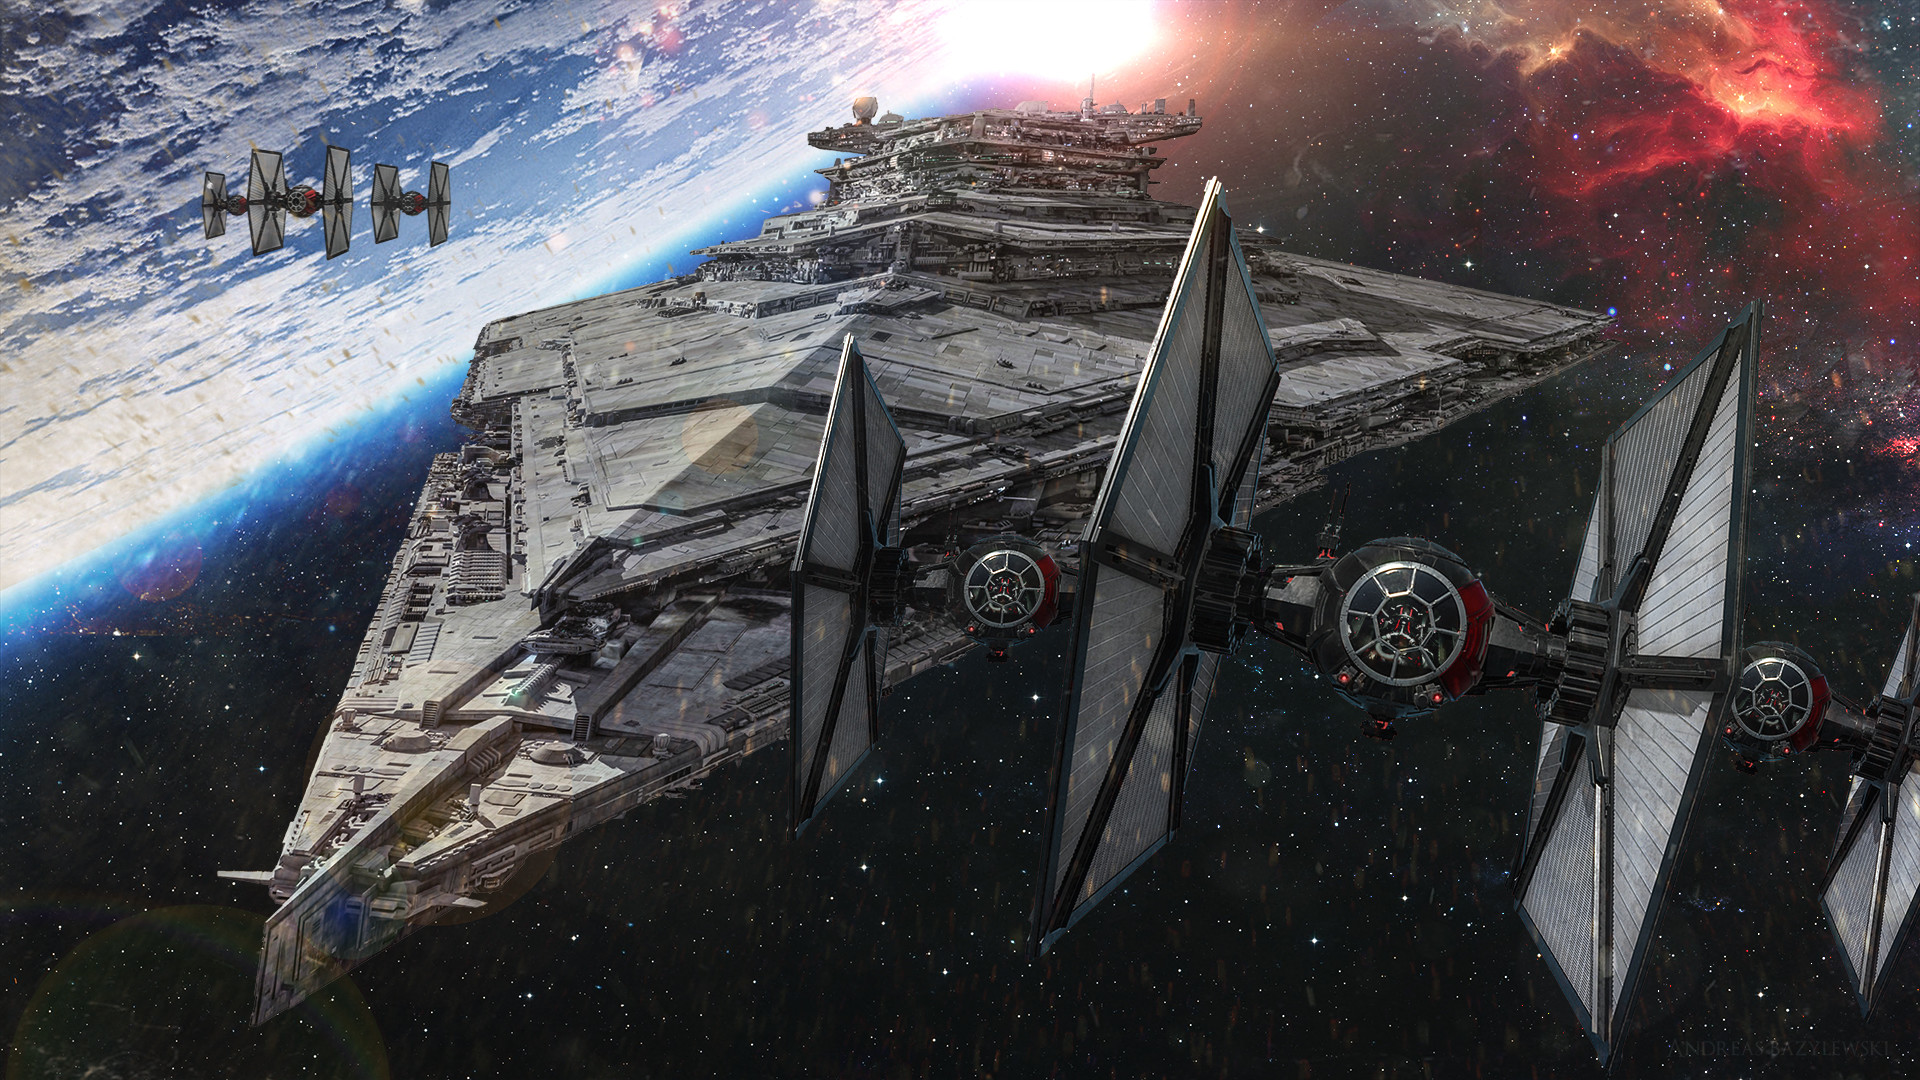 Star Wars: The Force Awakens Desktop Wallpapers